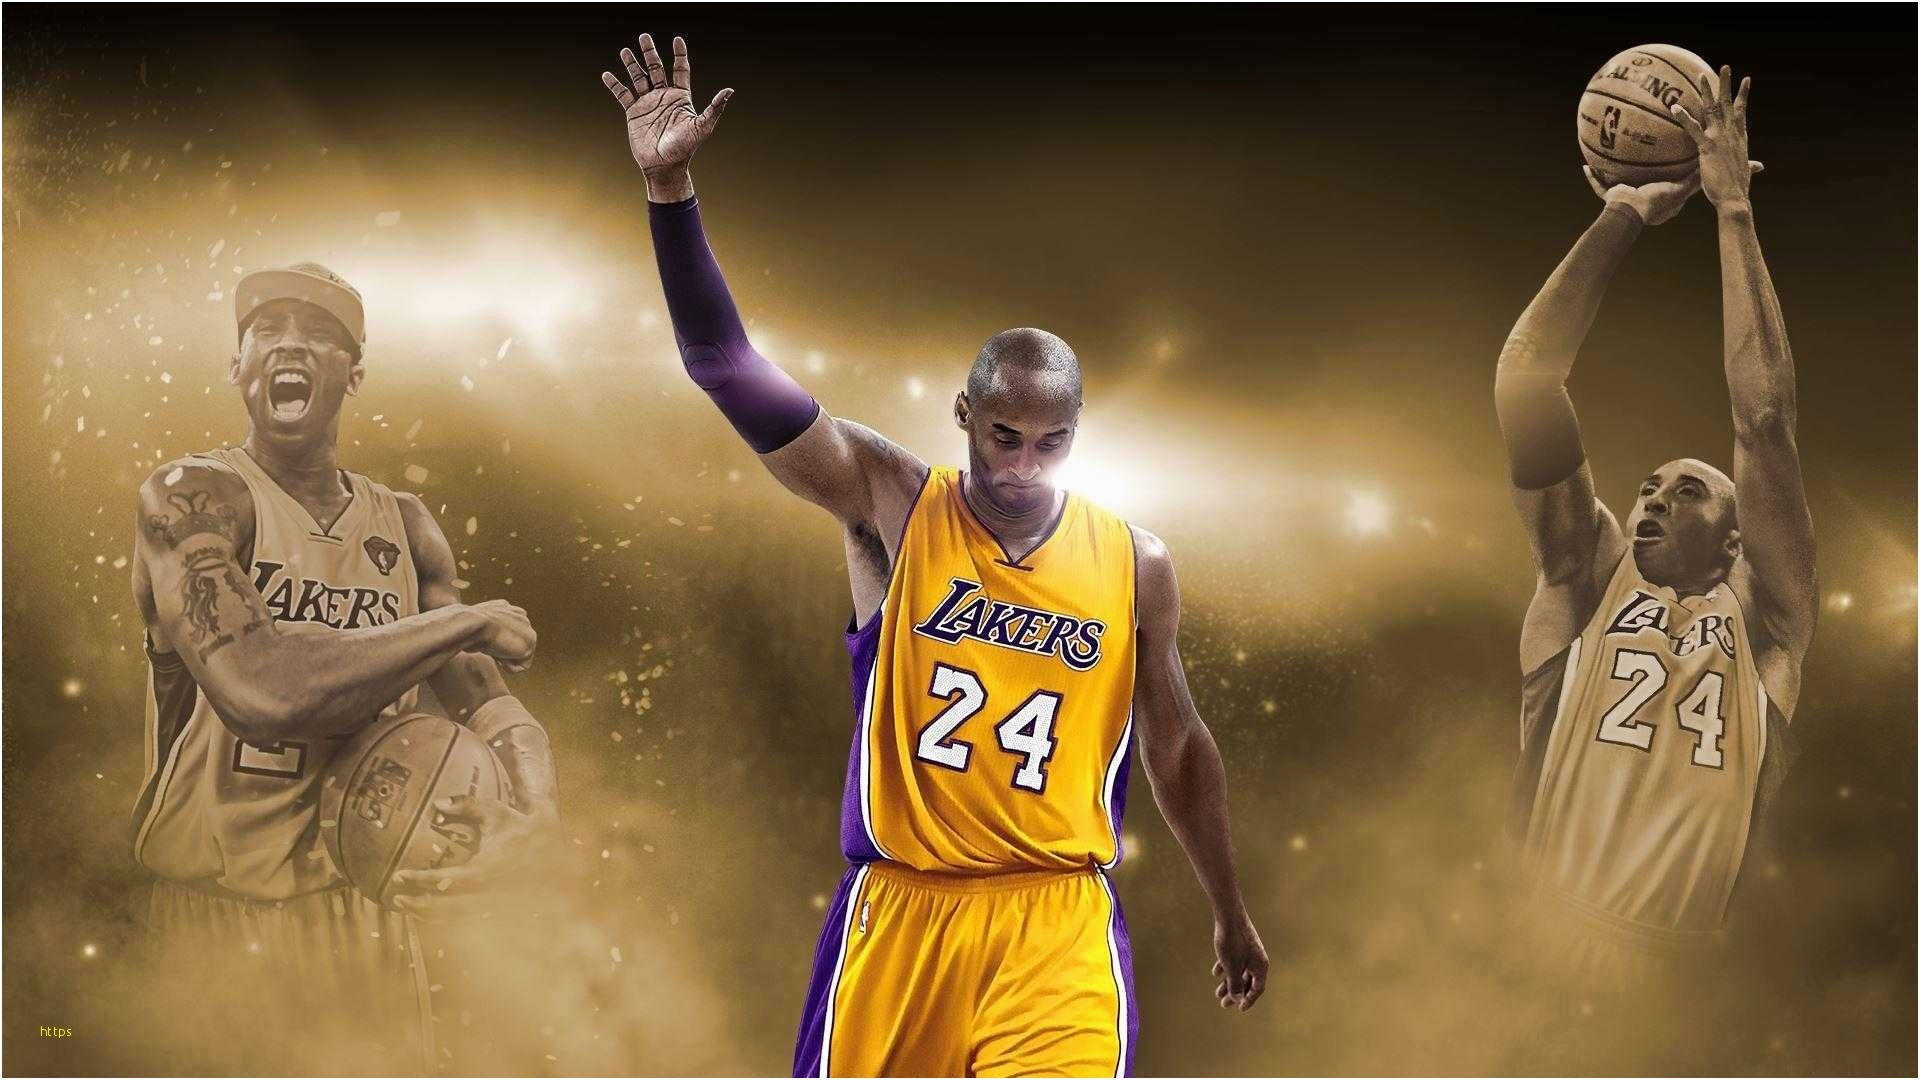 Download Kobe Bryant Shining in the Spotlight Wallpaper 